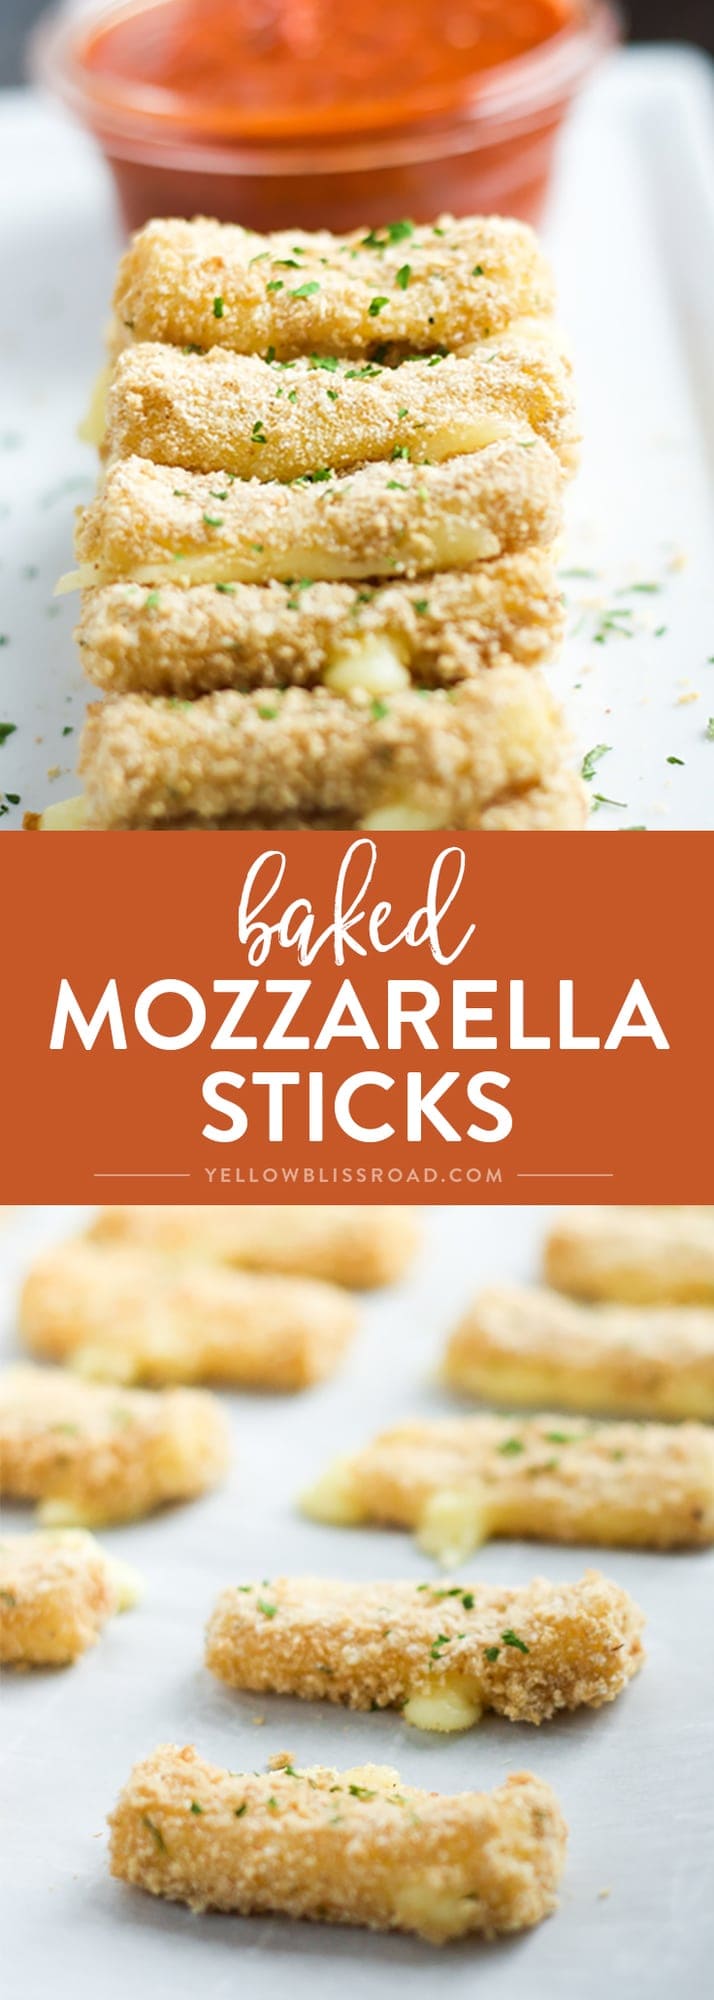 Social media image of baked mozzarella sticks